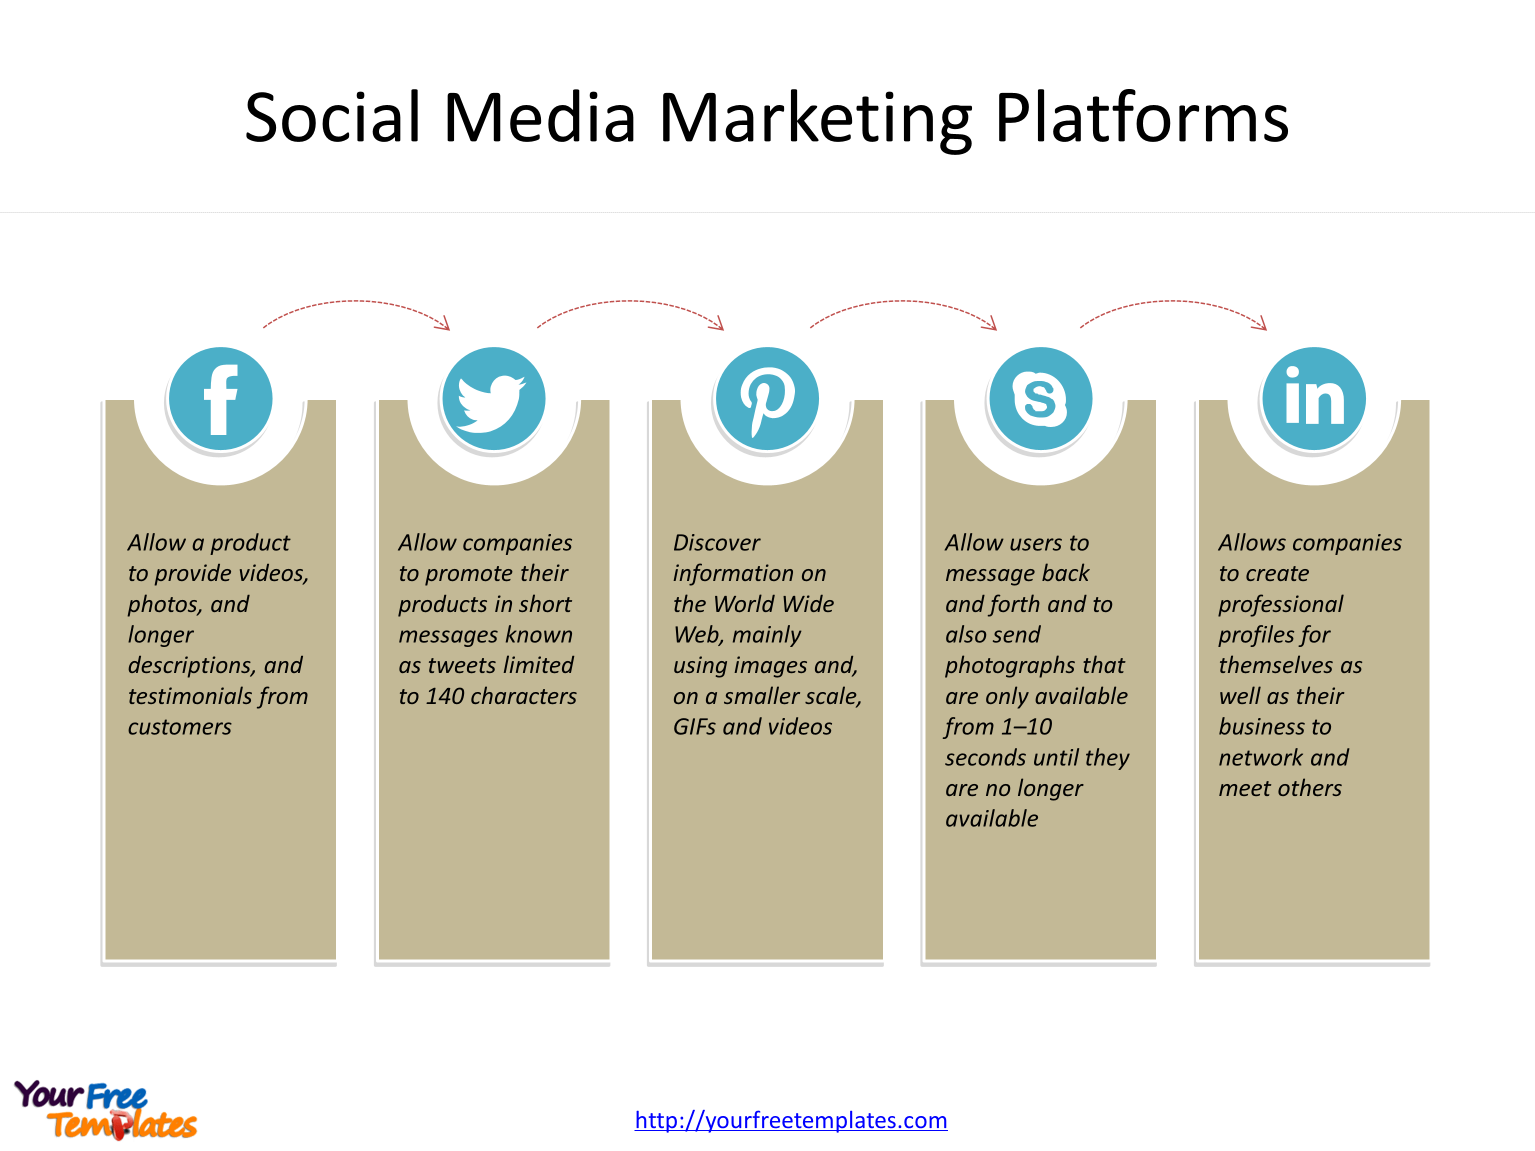 Social media marketing diagram with platforms